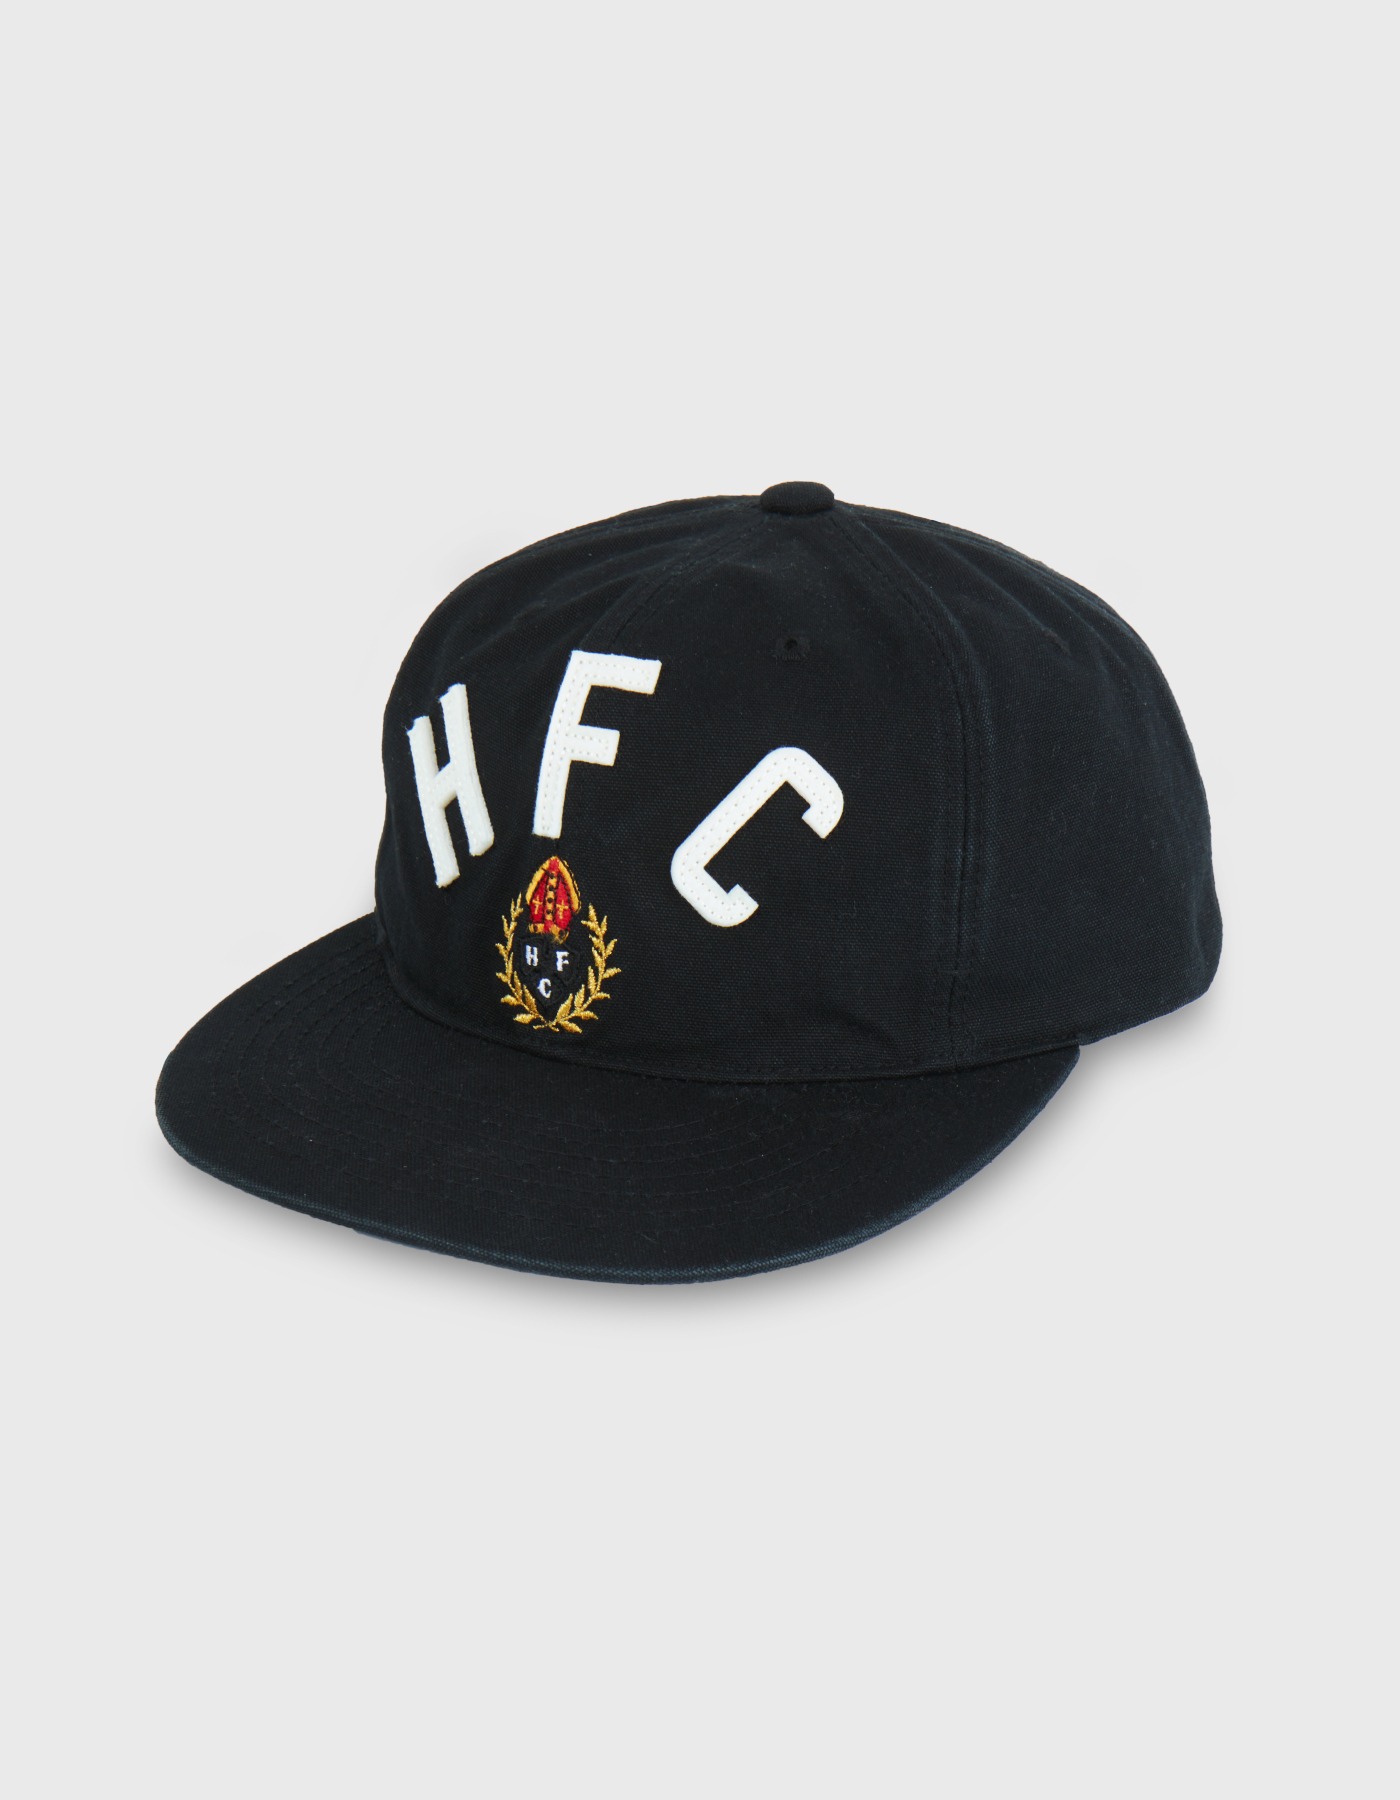 HFC FELT 6 PANEL CAP / Black